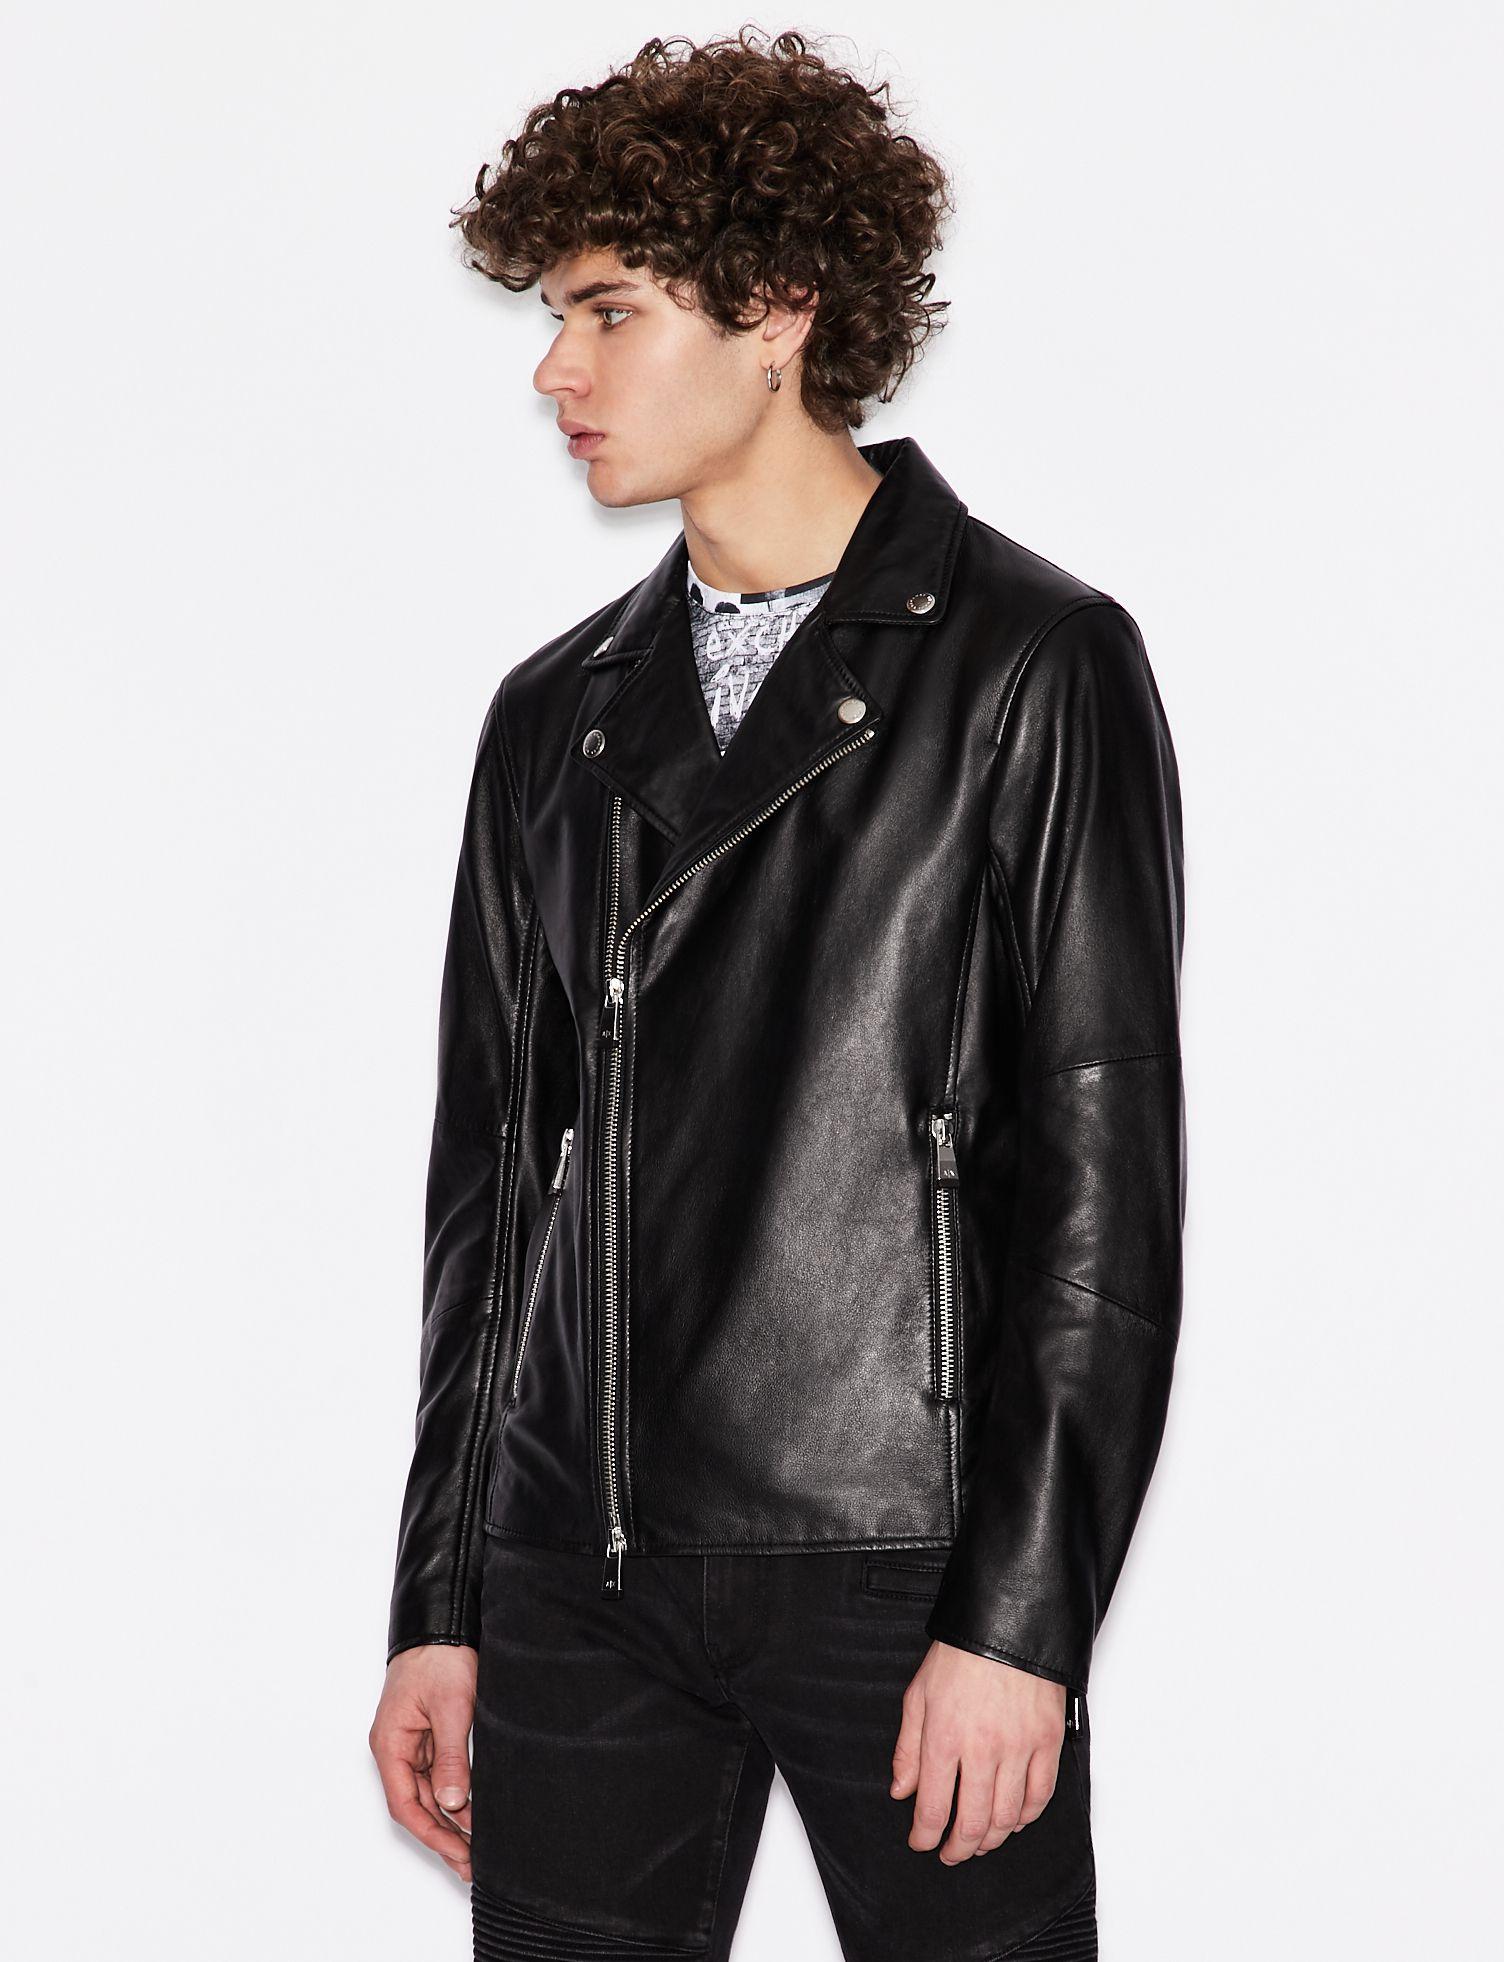 Armani Exchange Leather Jacket in Black for Men - Lyst